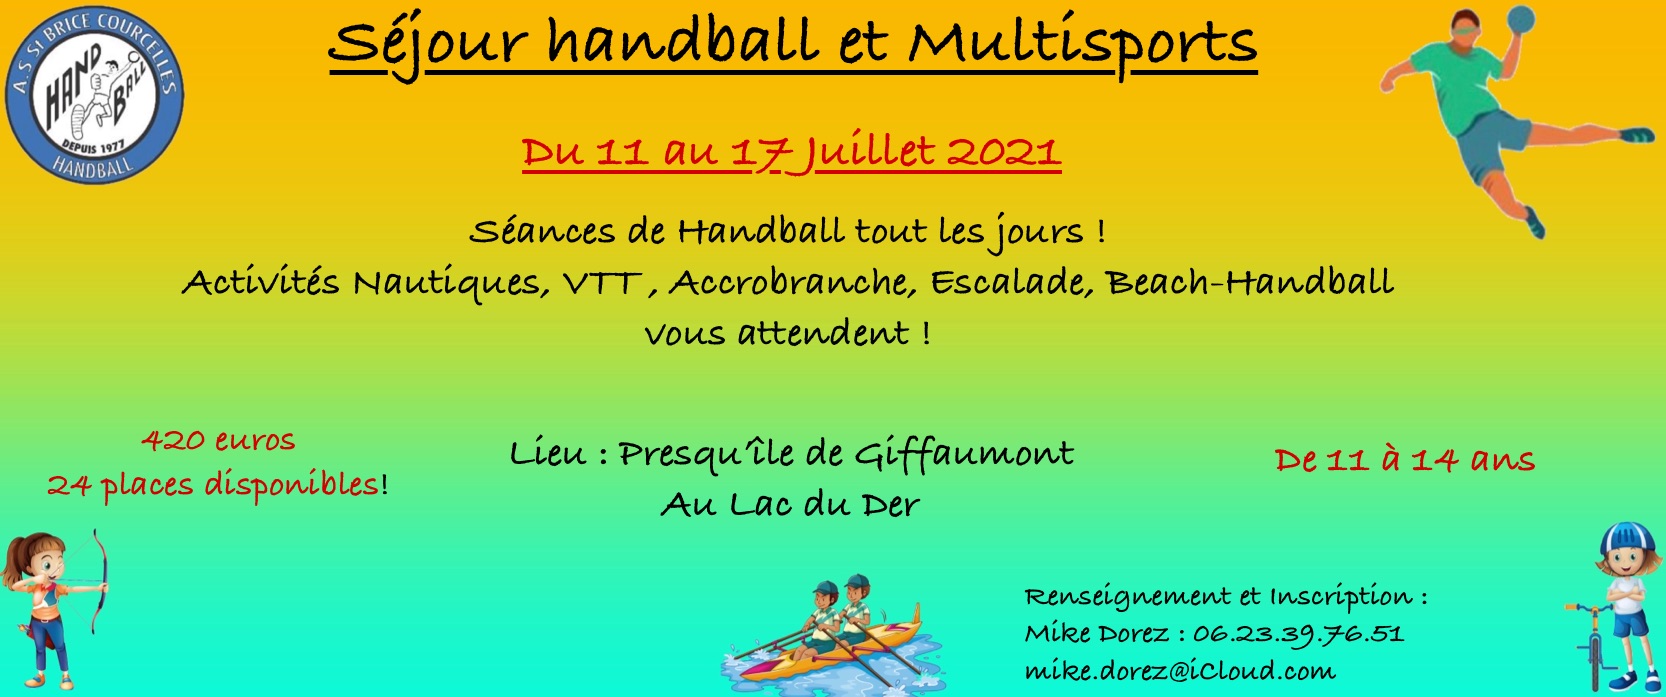 Séjour Handball et Multisports en juillet 2021 !